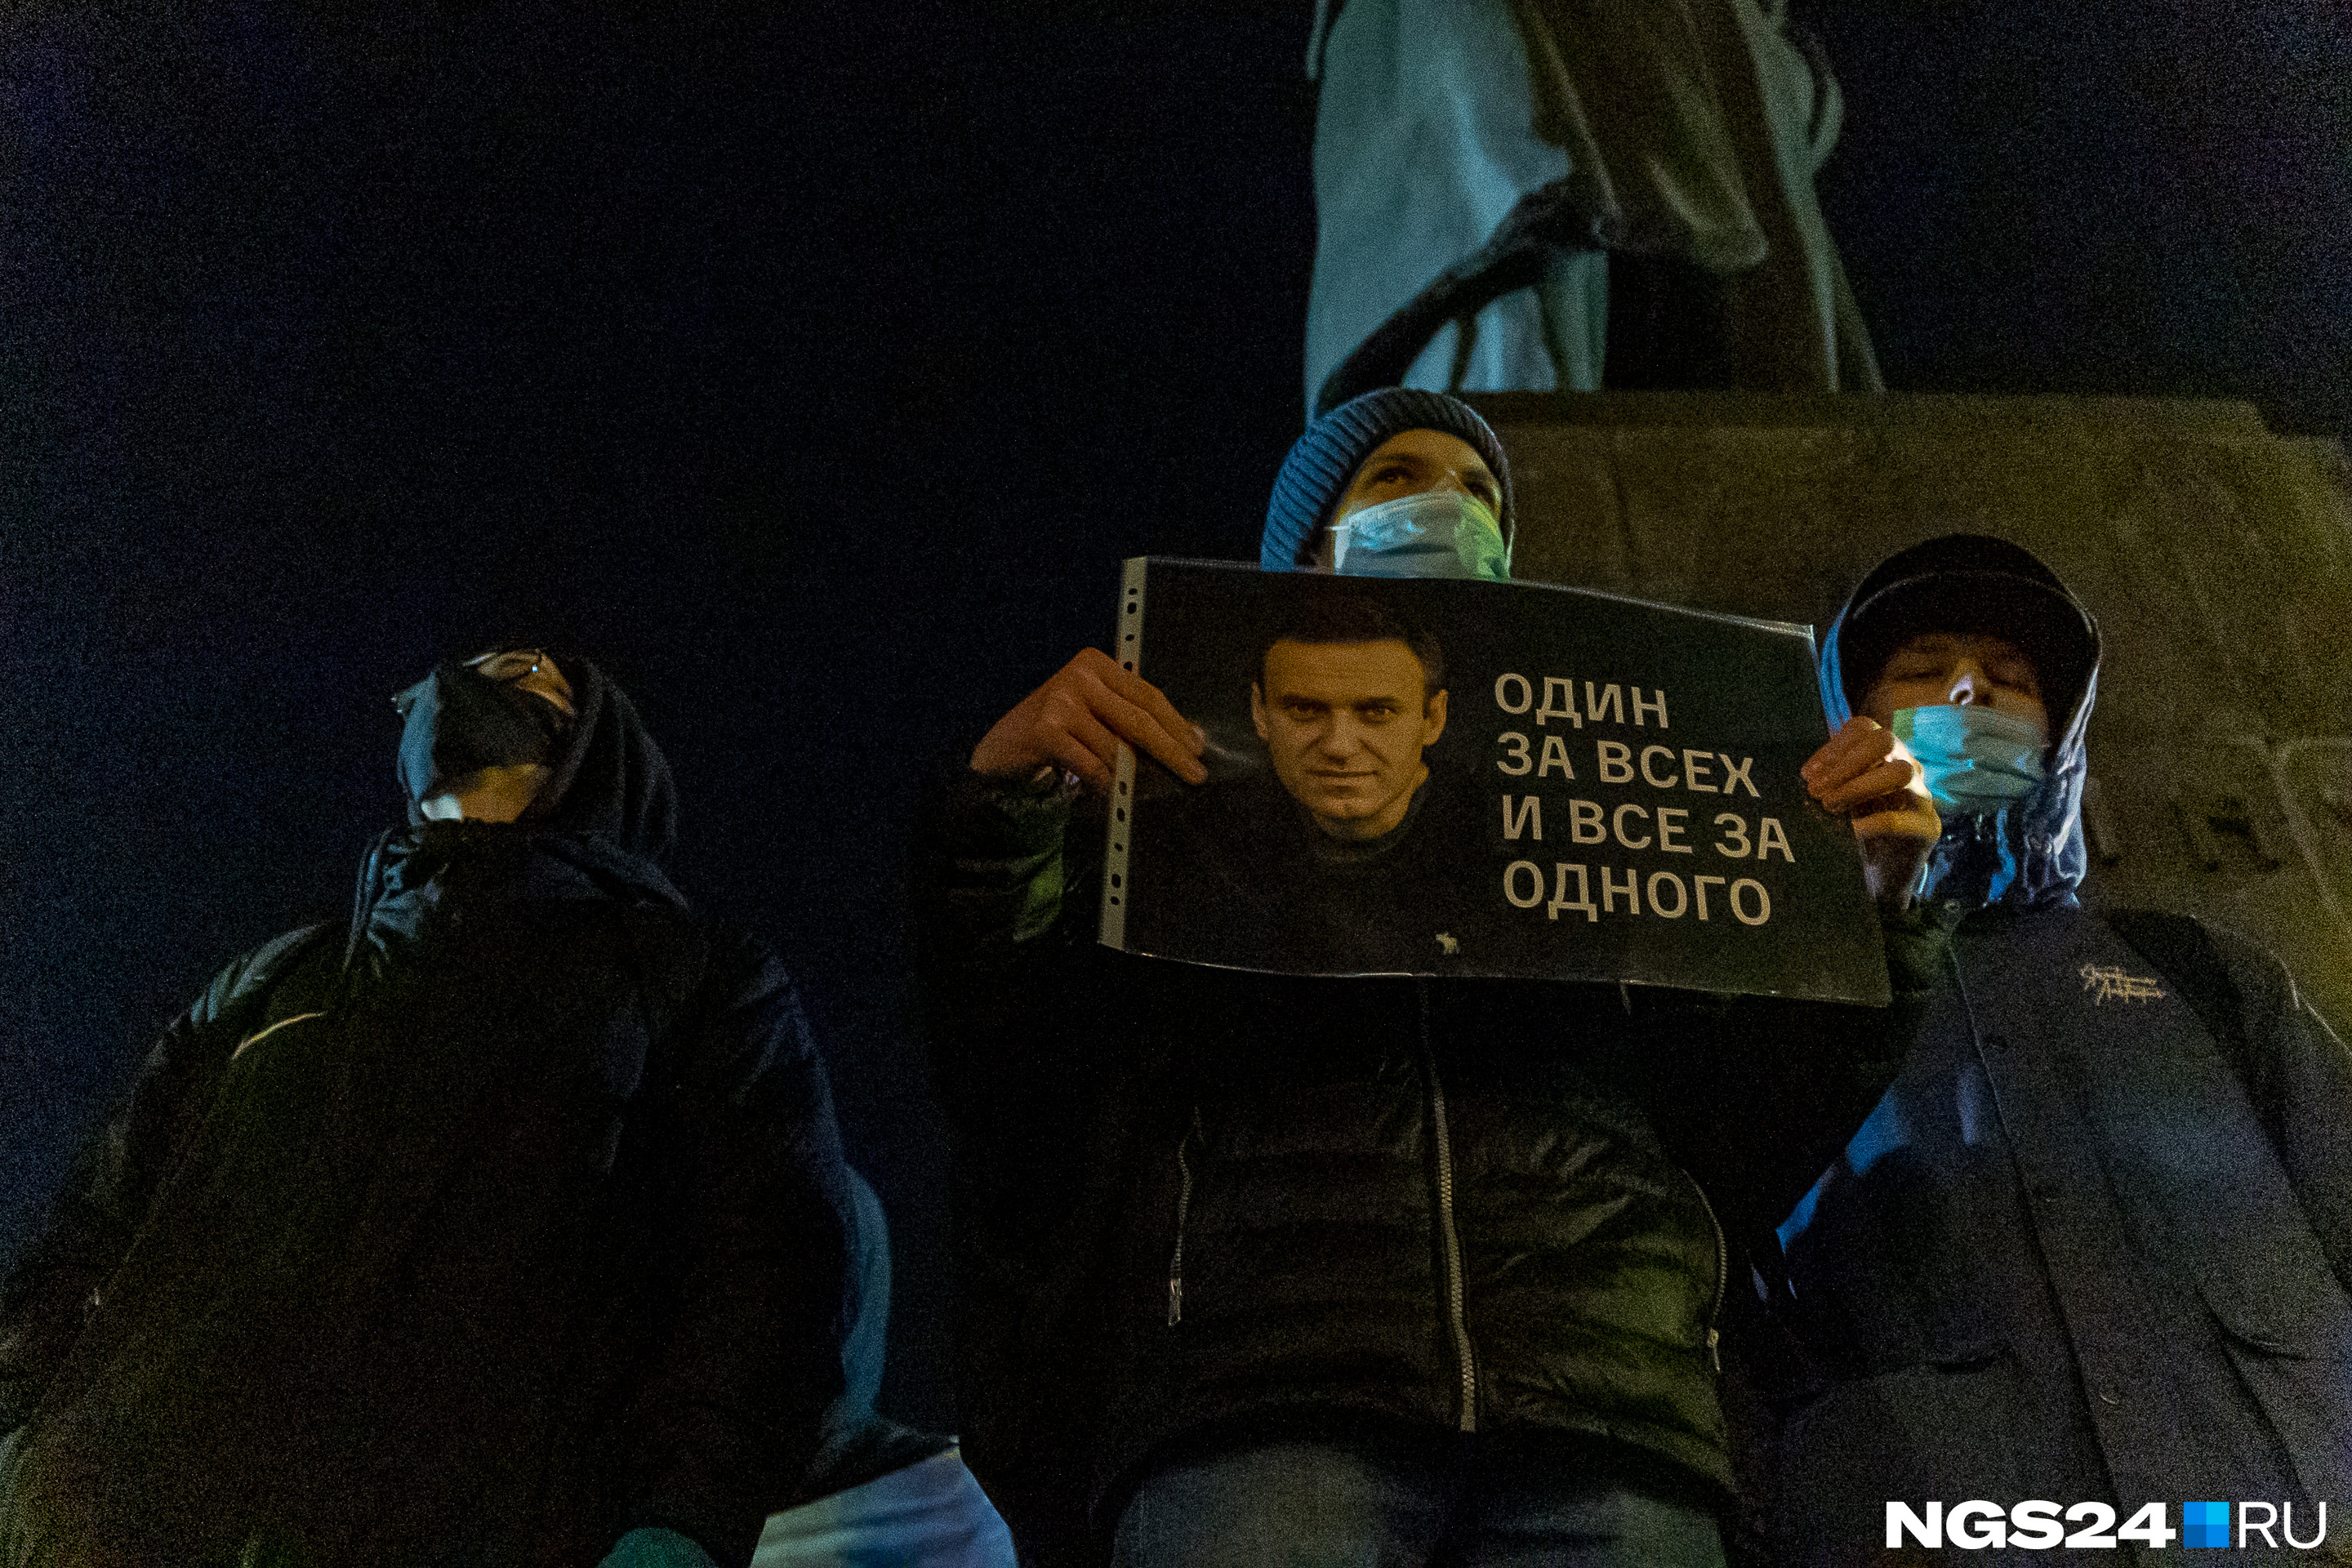 Плакат с Навальным пошел по рукам